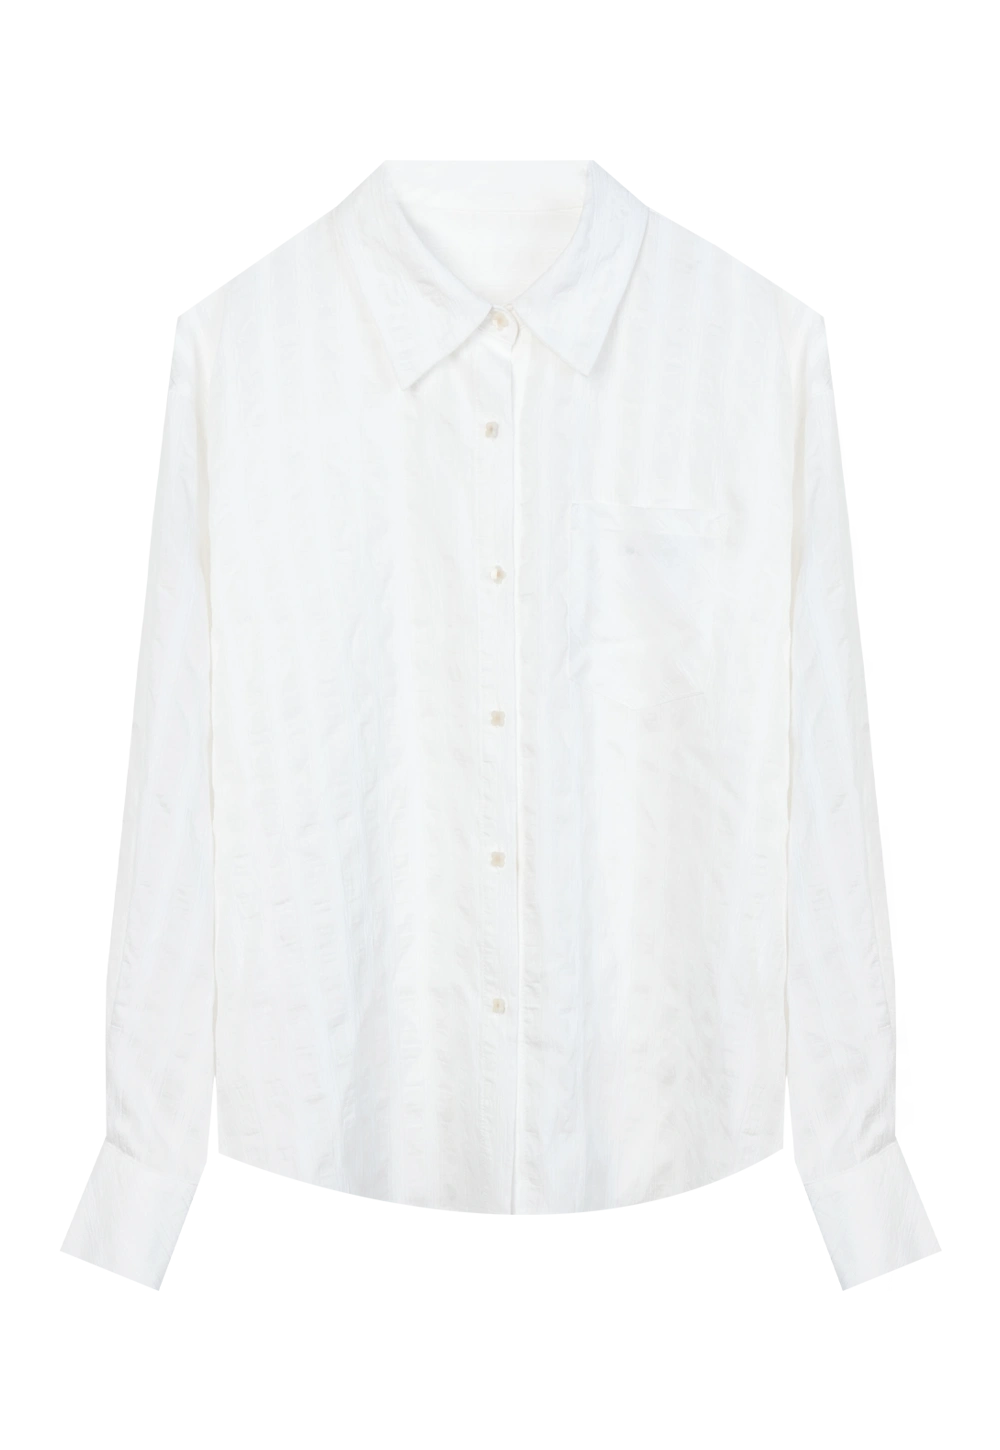 Classic White Linen Button-Up Shirt - Timeless Wardrobe Staple